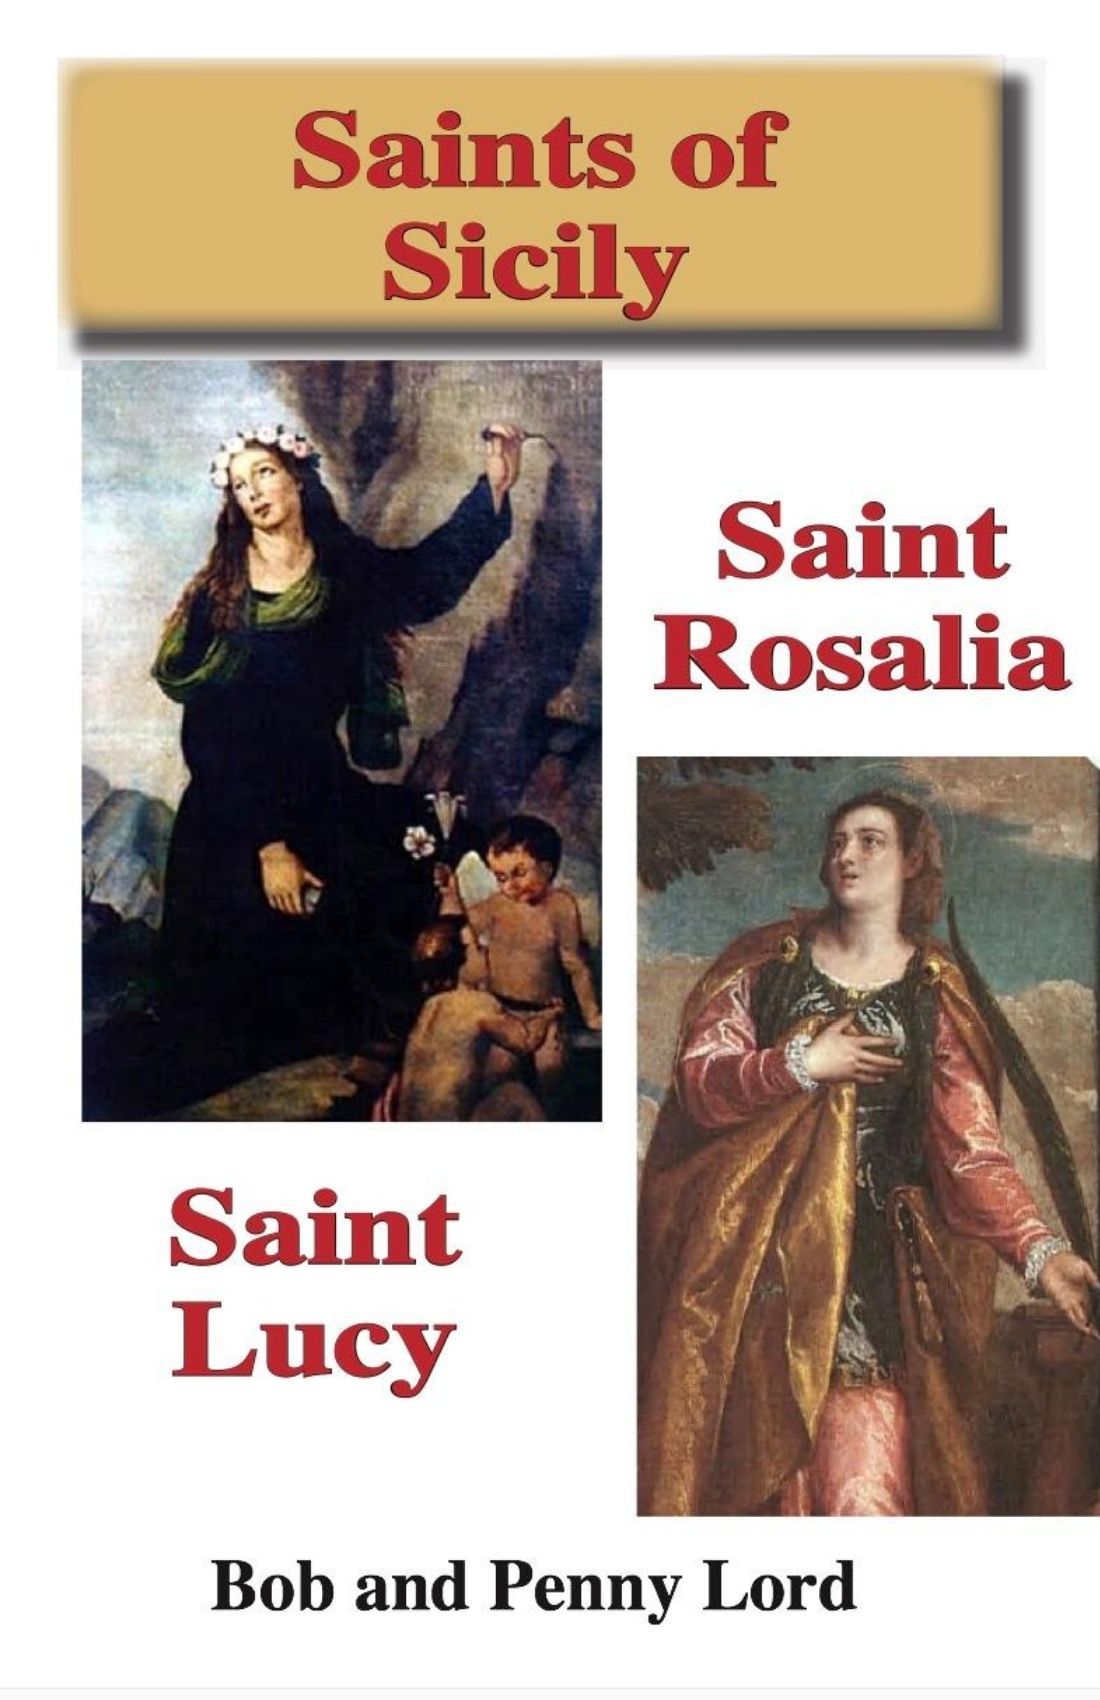 Saints of Sicily Saint Rosalia Saint Lucy DVD - Bob and Penny Lord